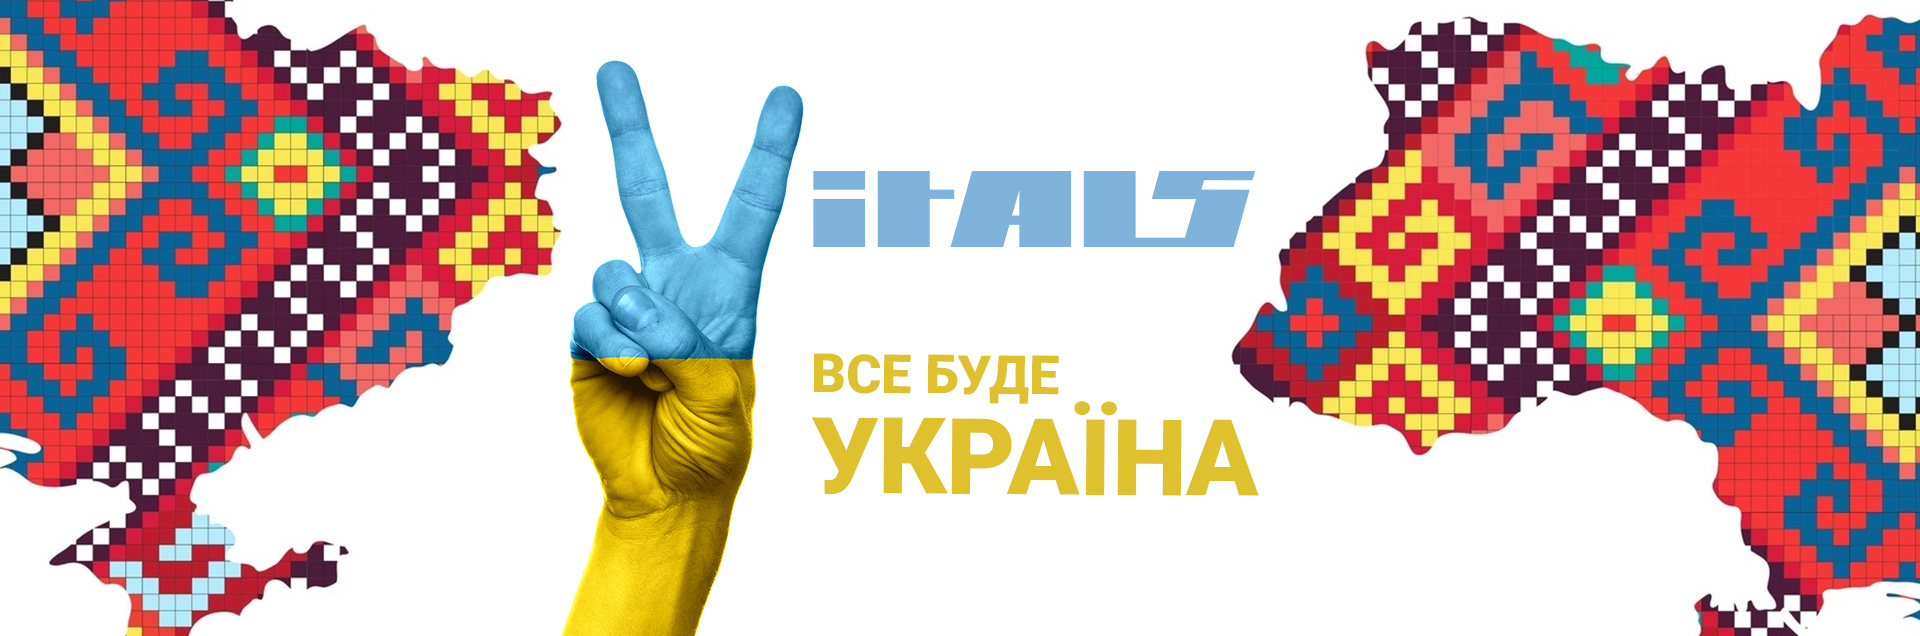 putin-pidar-ukraina-ponad-use-2022-vitals